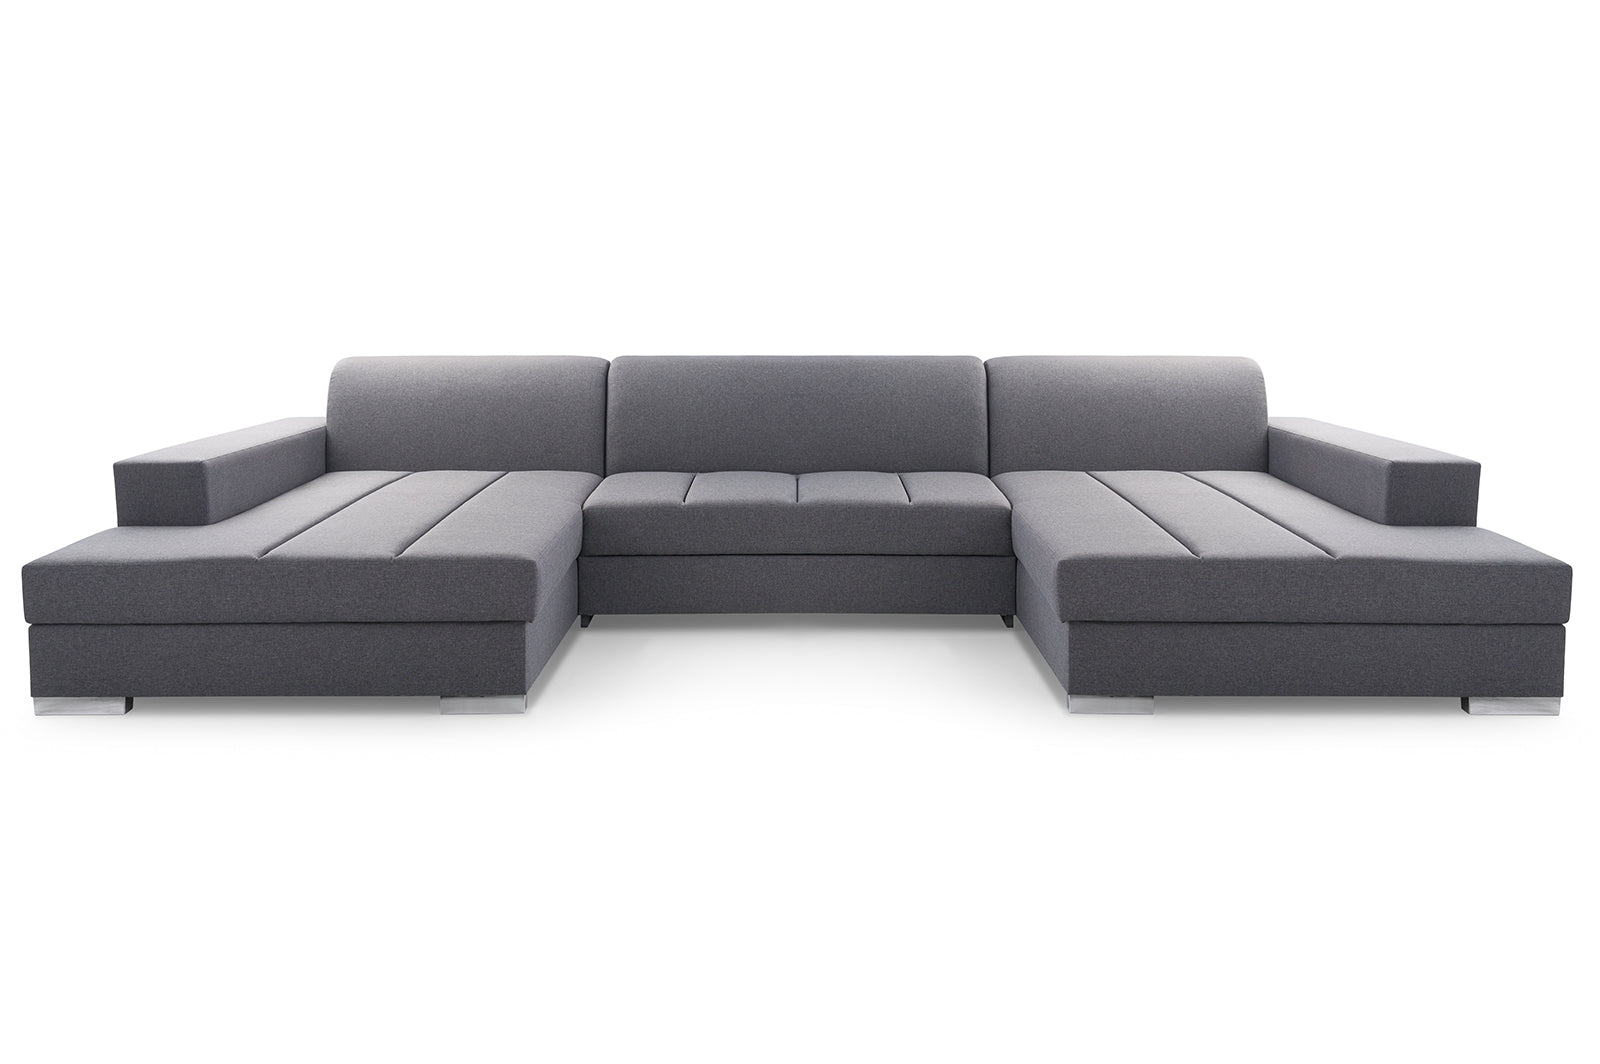 Vista de frente de sofá en forma de U modelo mistral